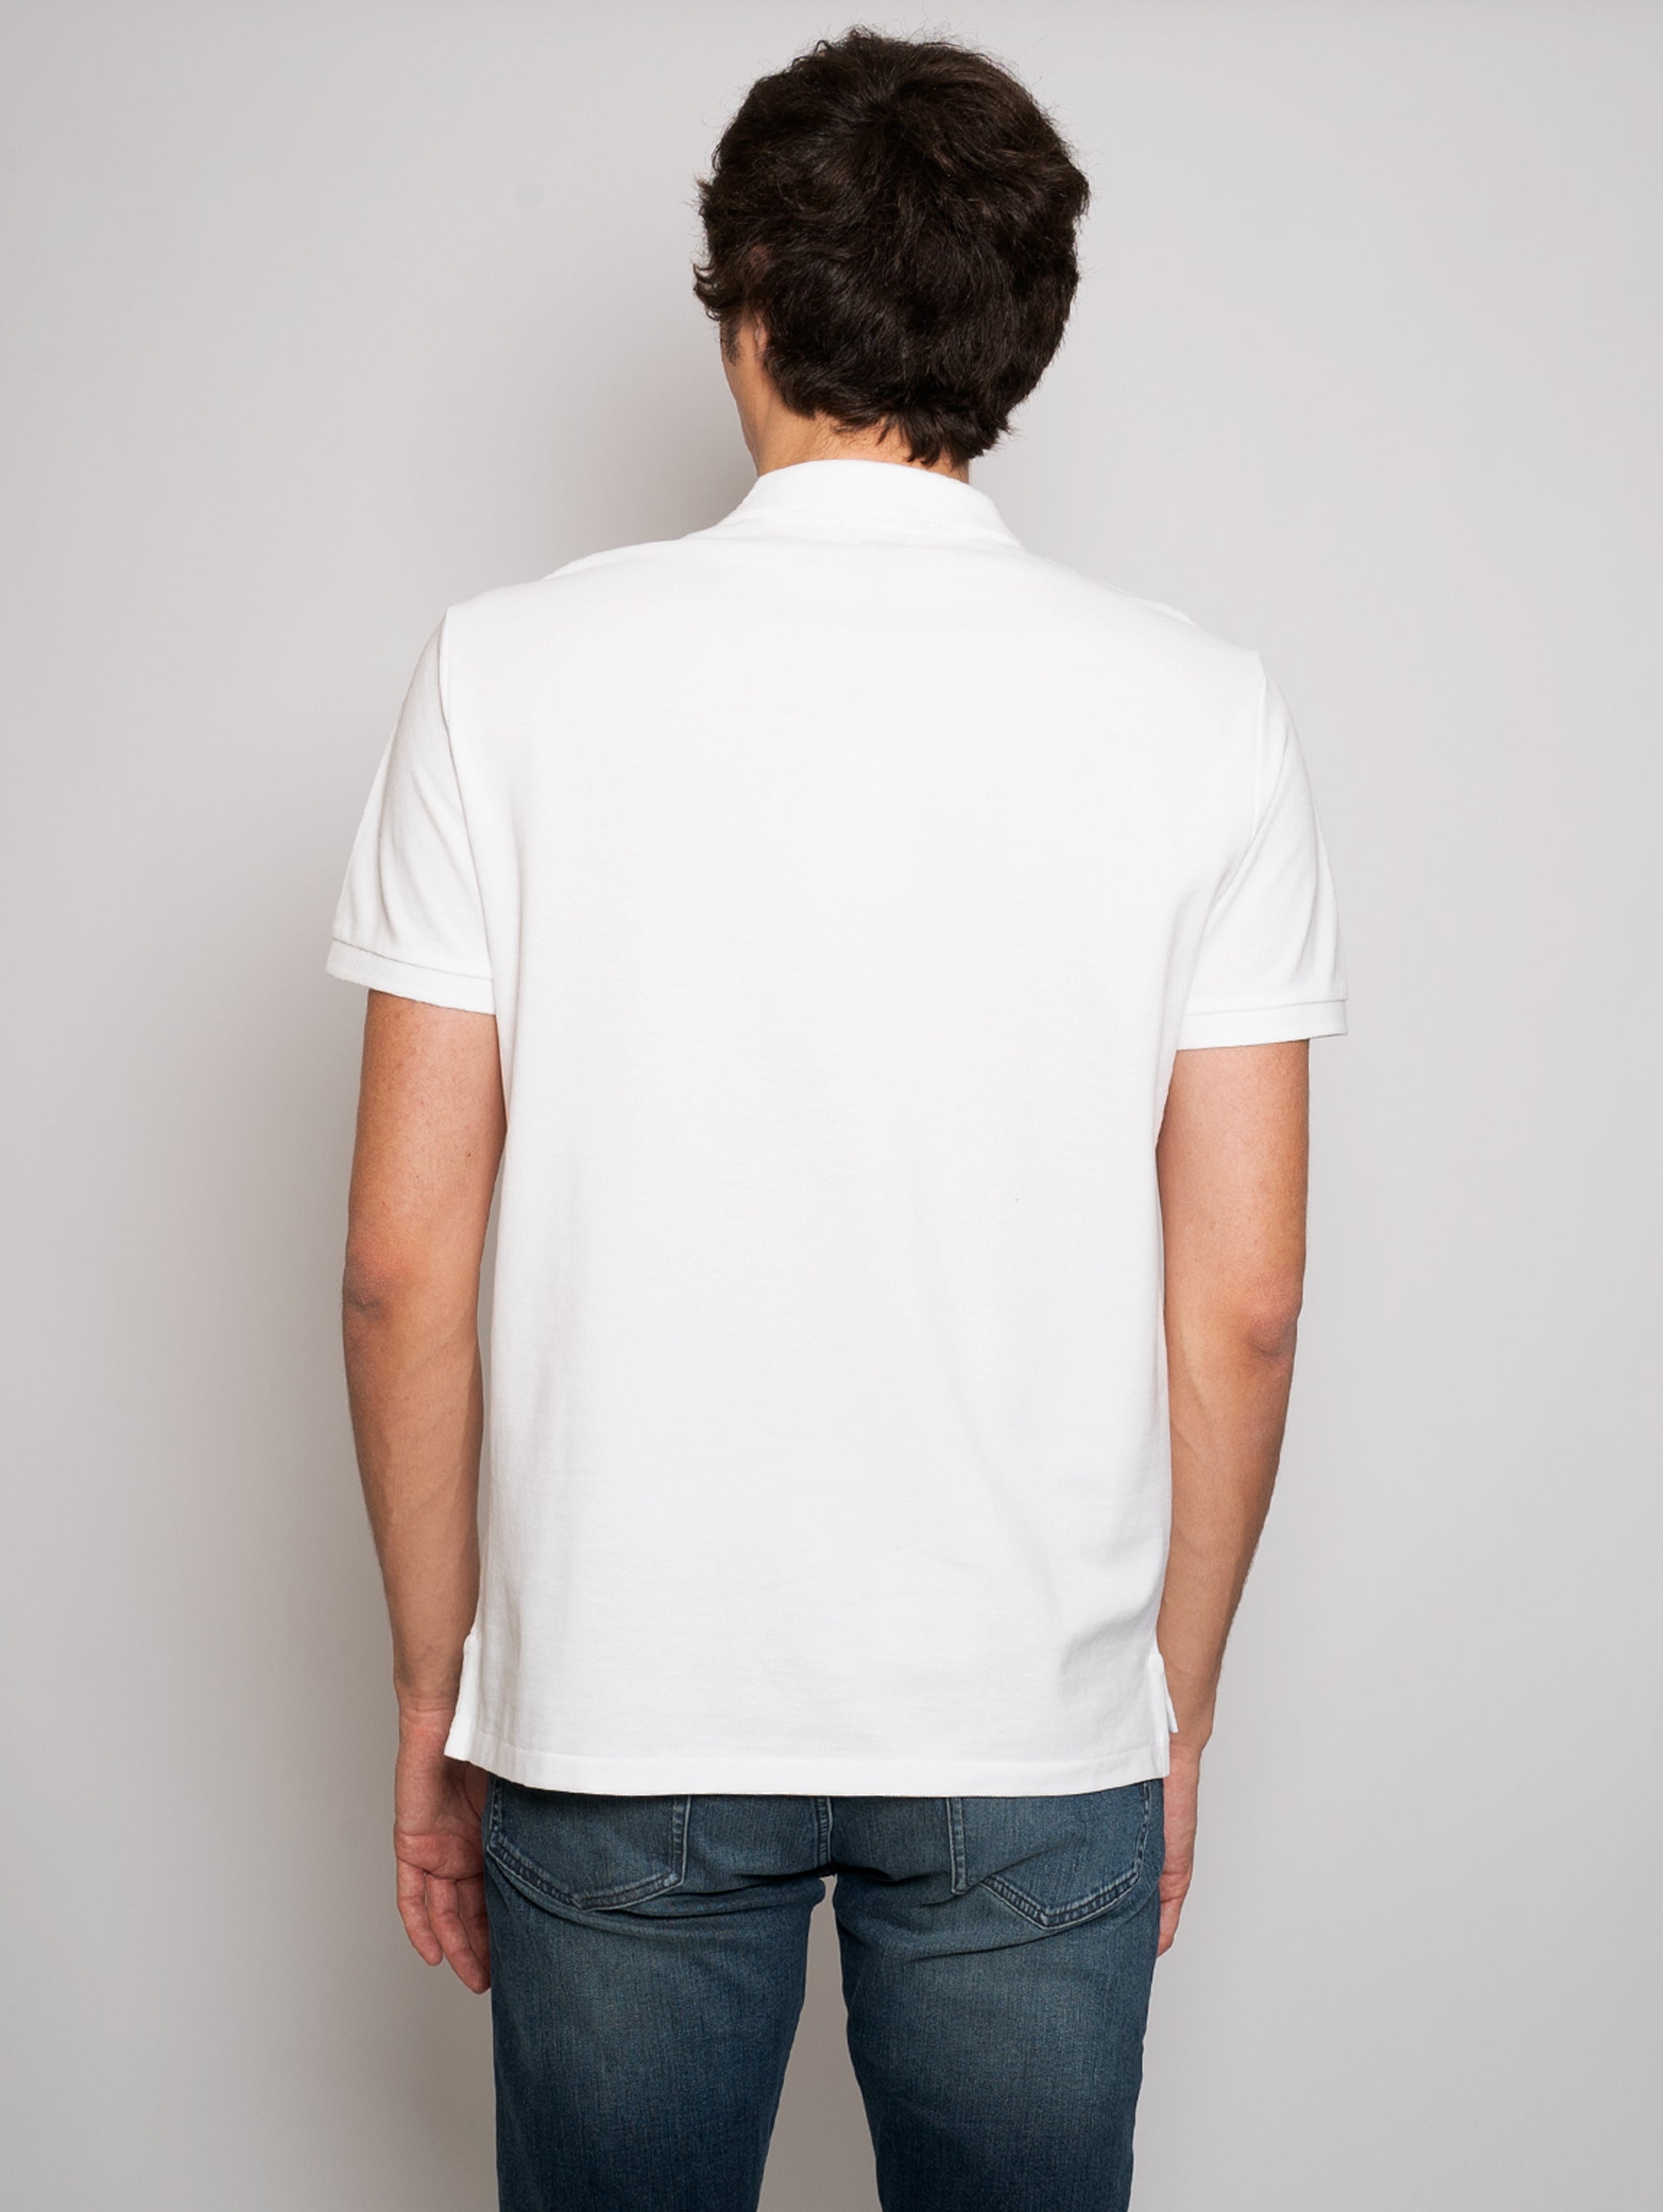 Custom Slim Fit White Cotton Polo Shirt